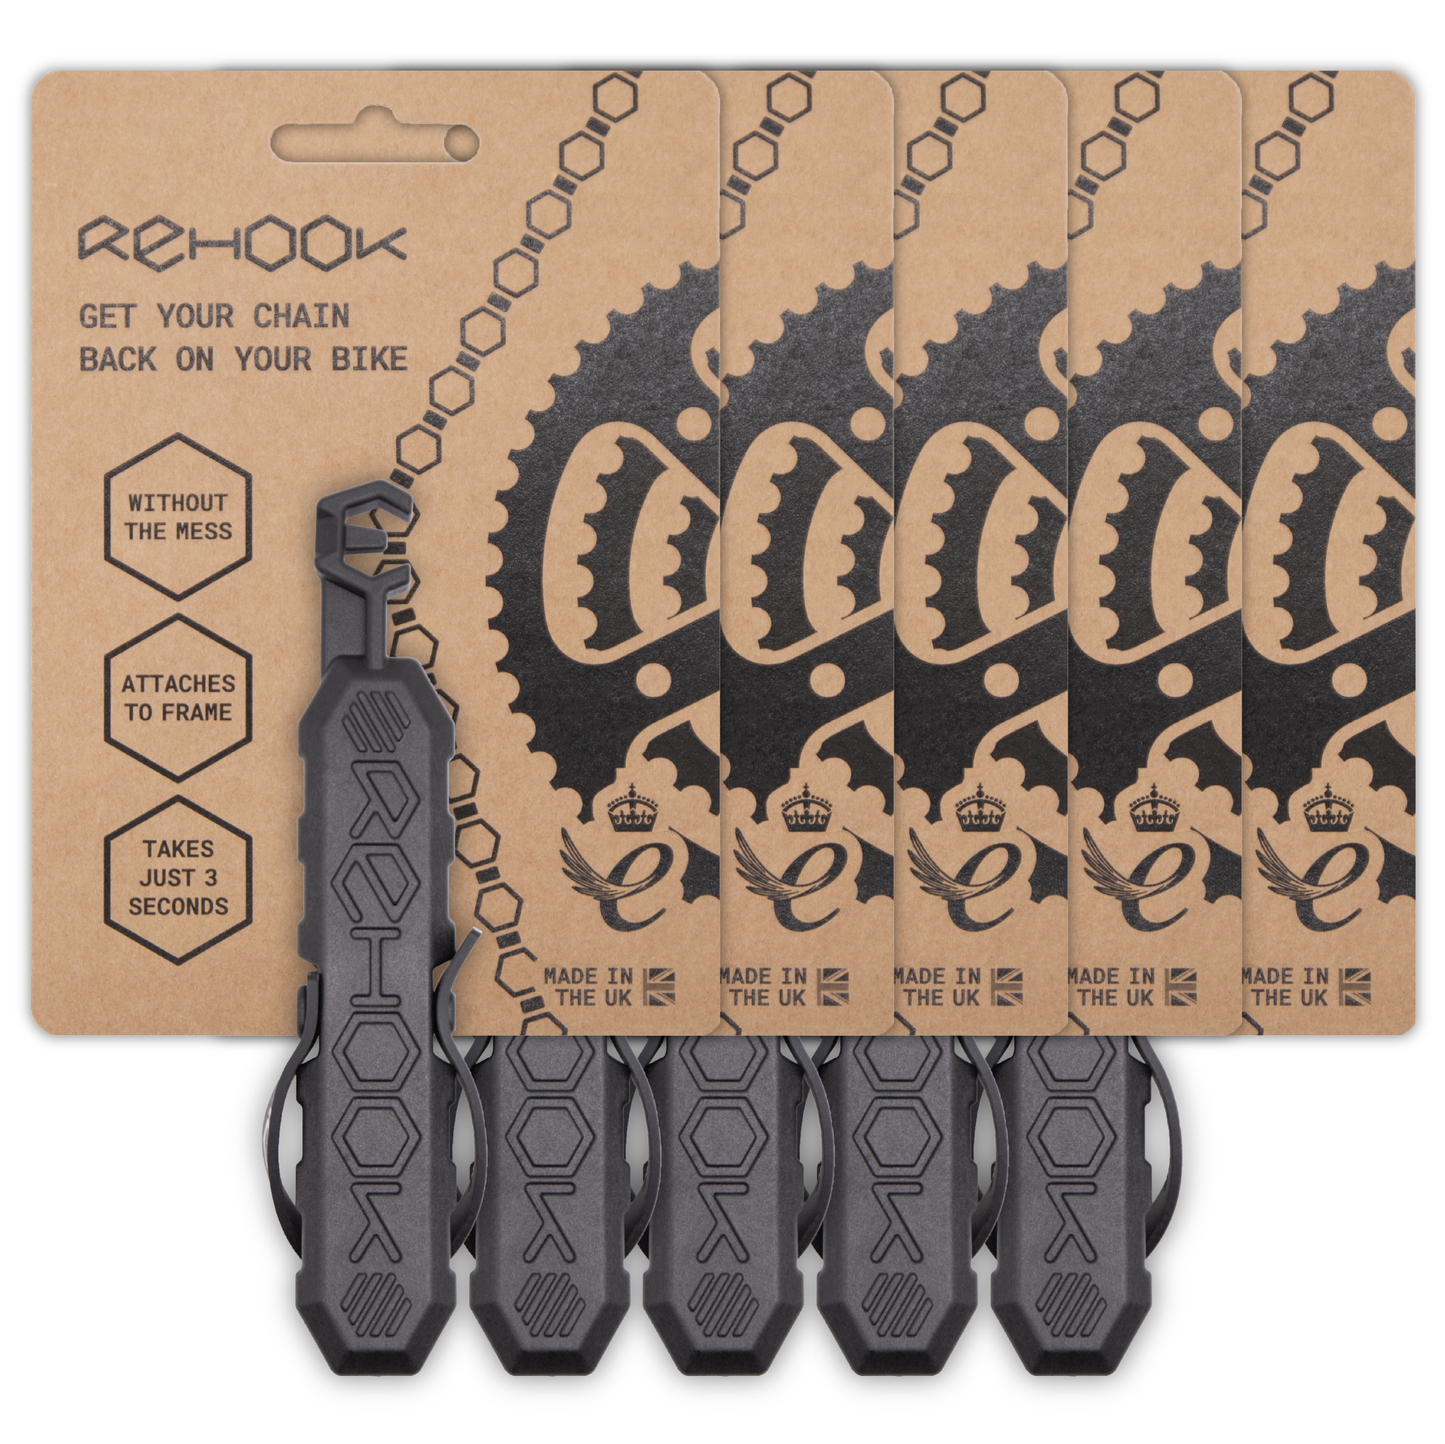 Rehook Original Bundle - Black